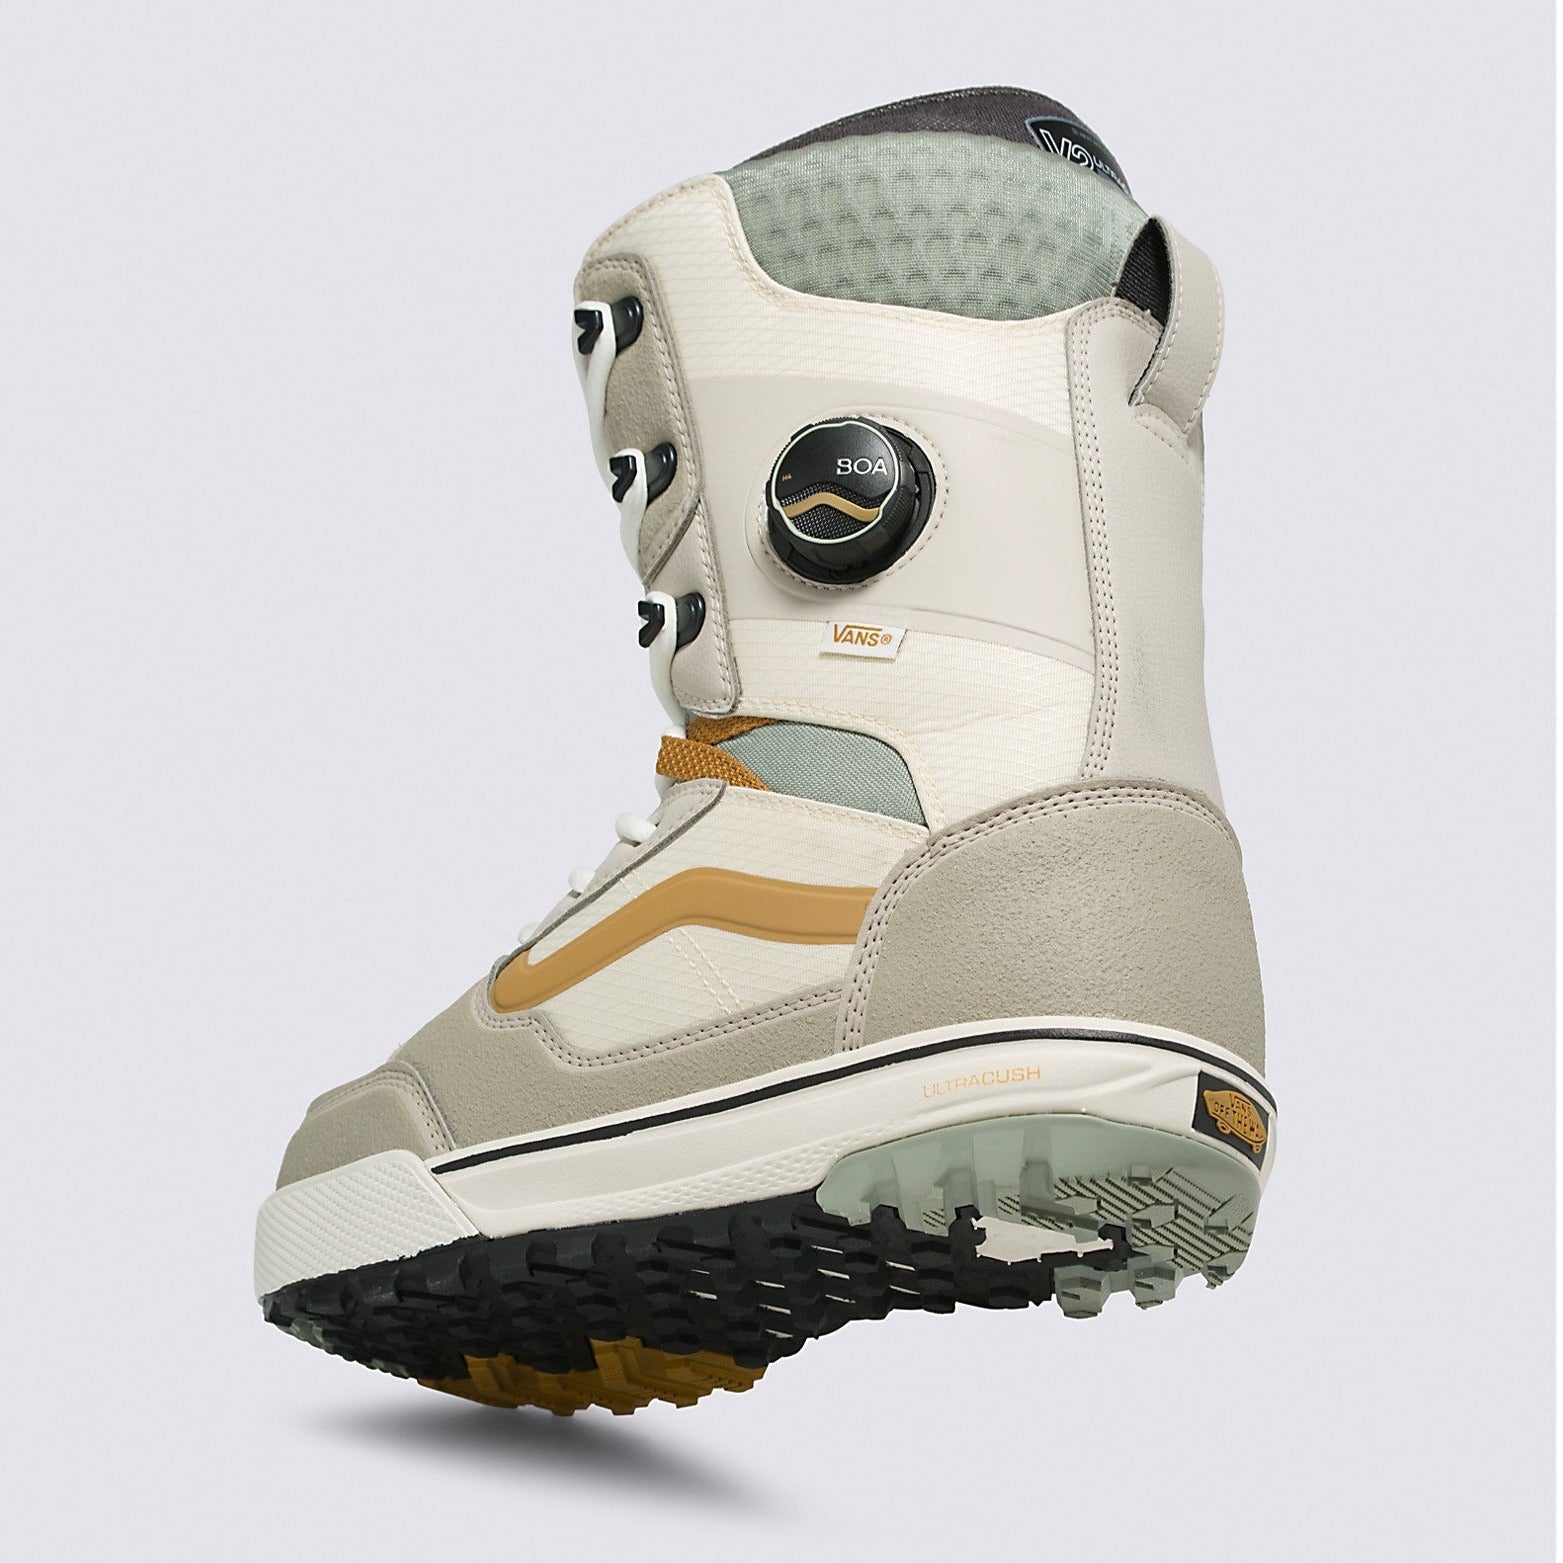 Darrell Mathes Invado Pro Vans Snowboard Boots Side